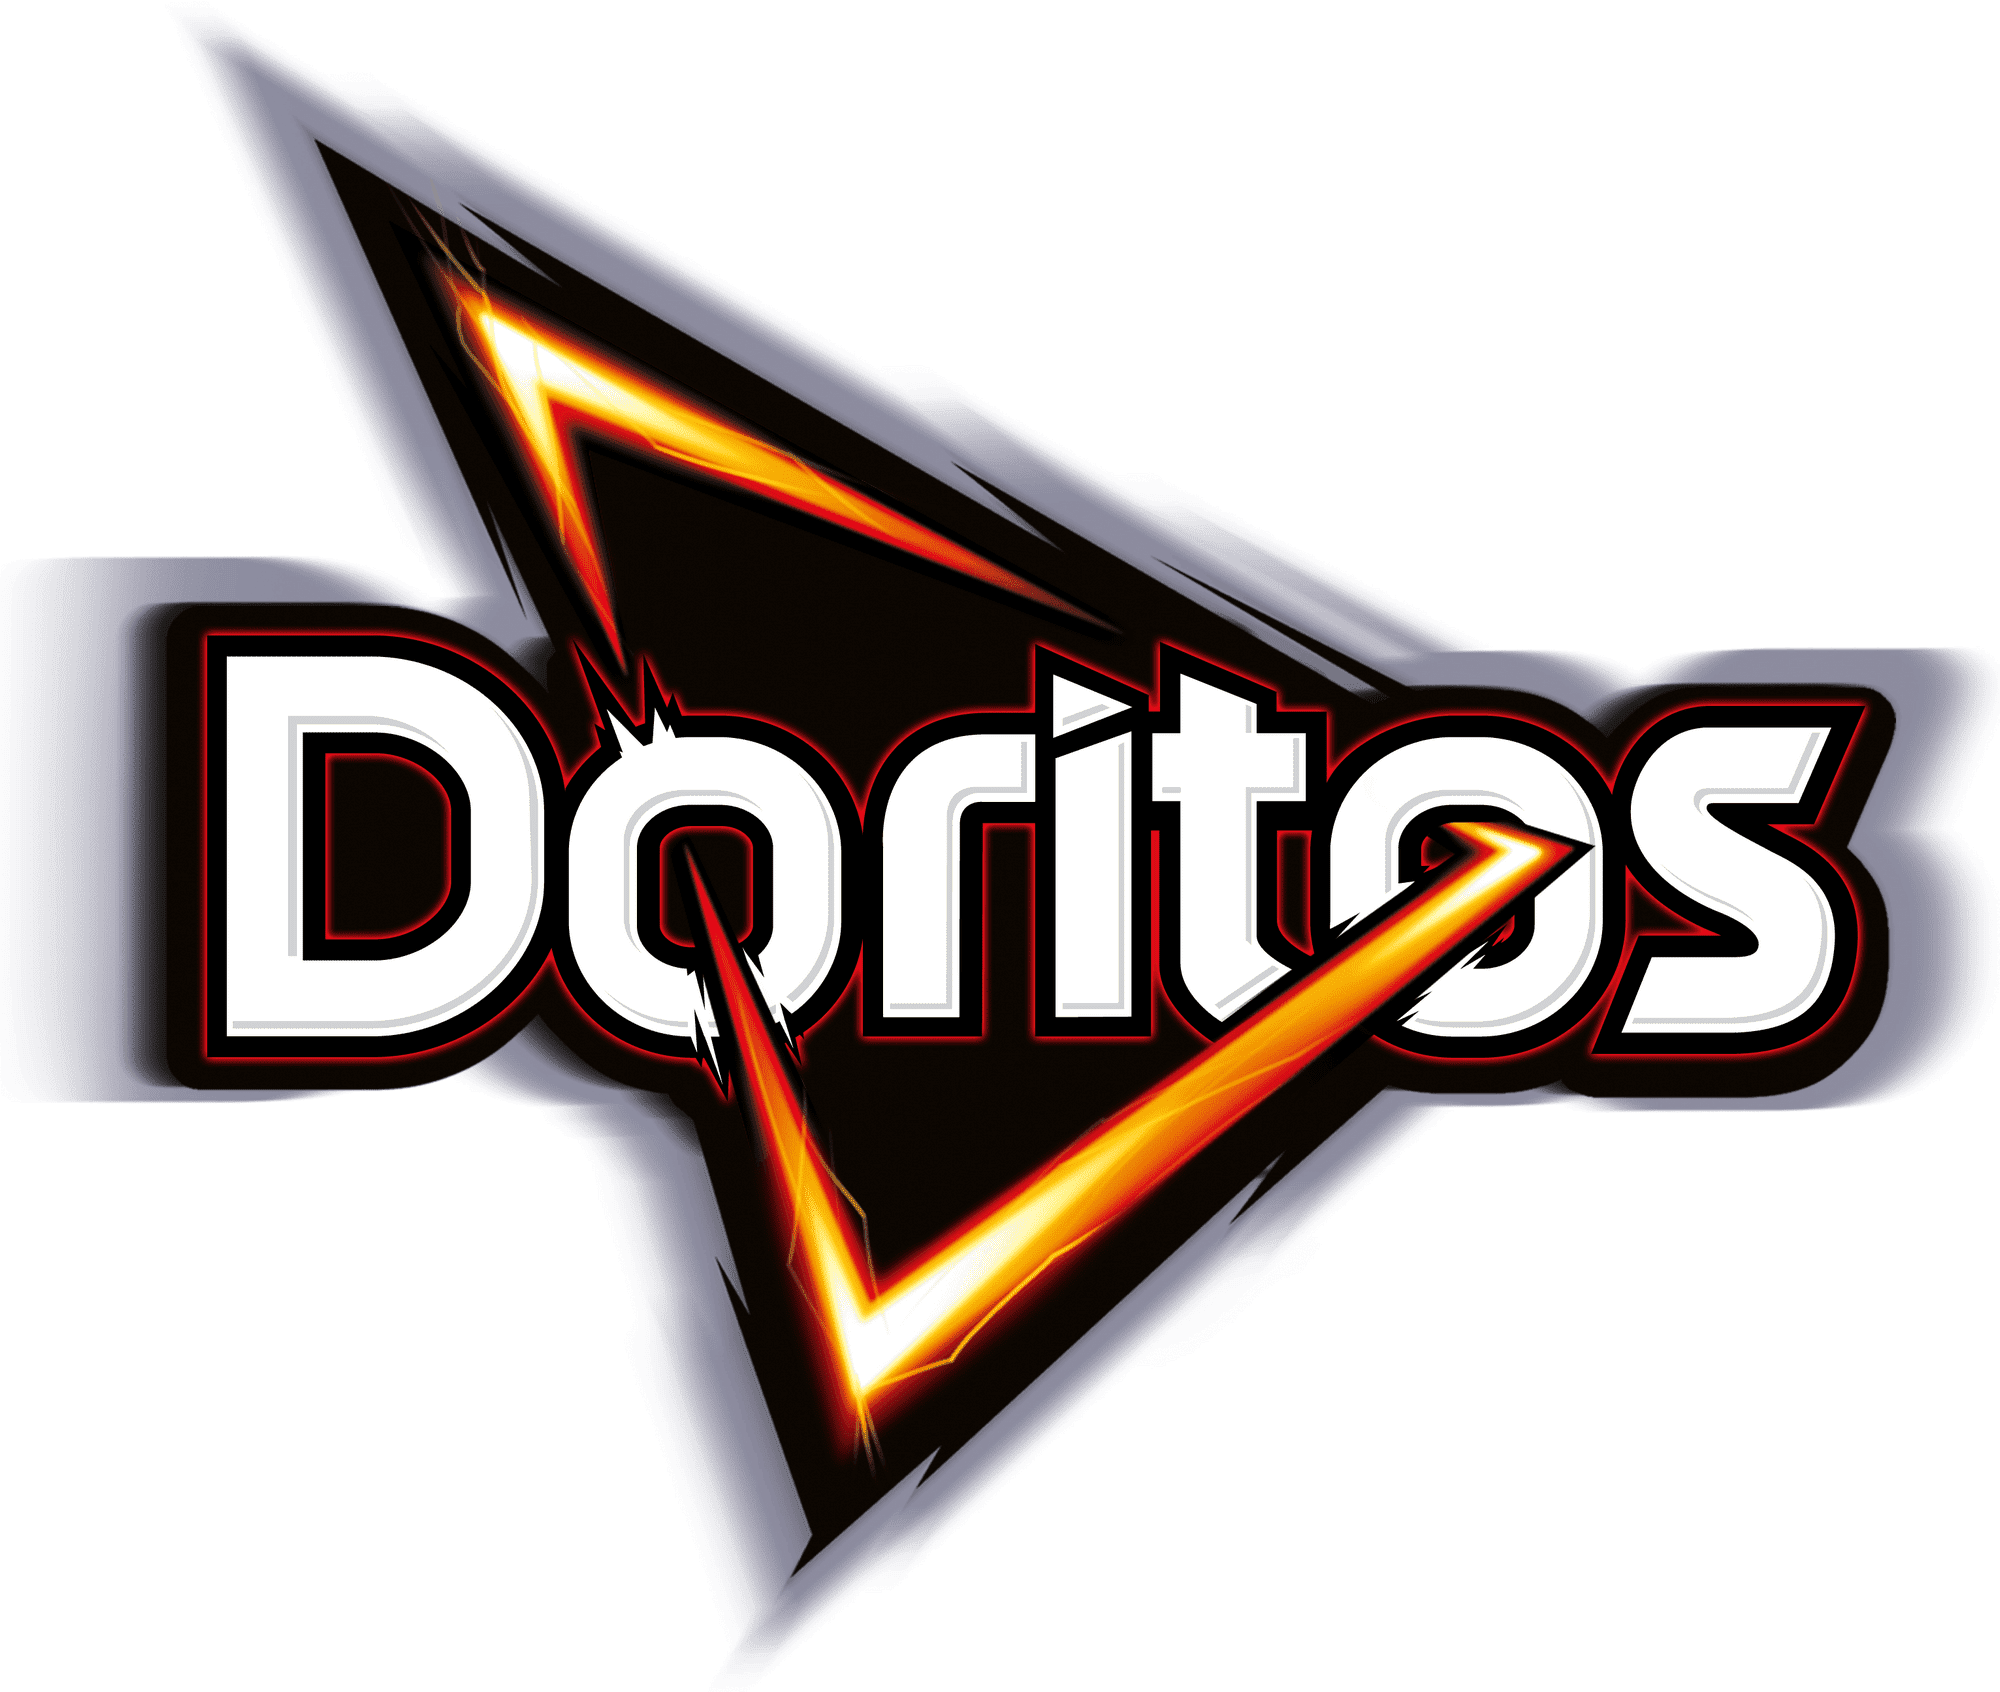 Doritos Logo png